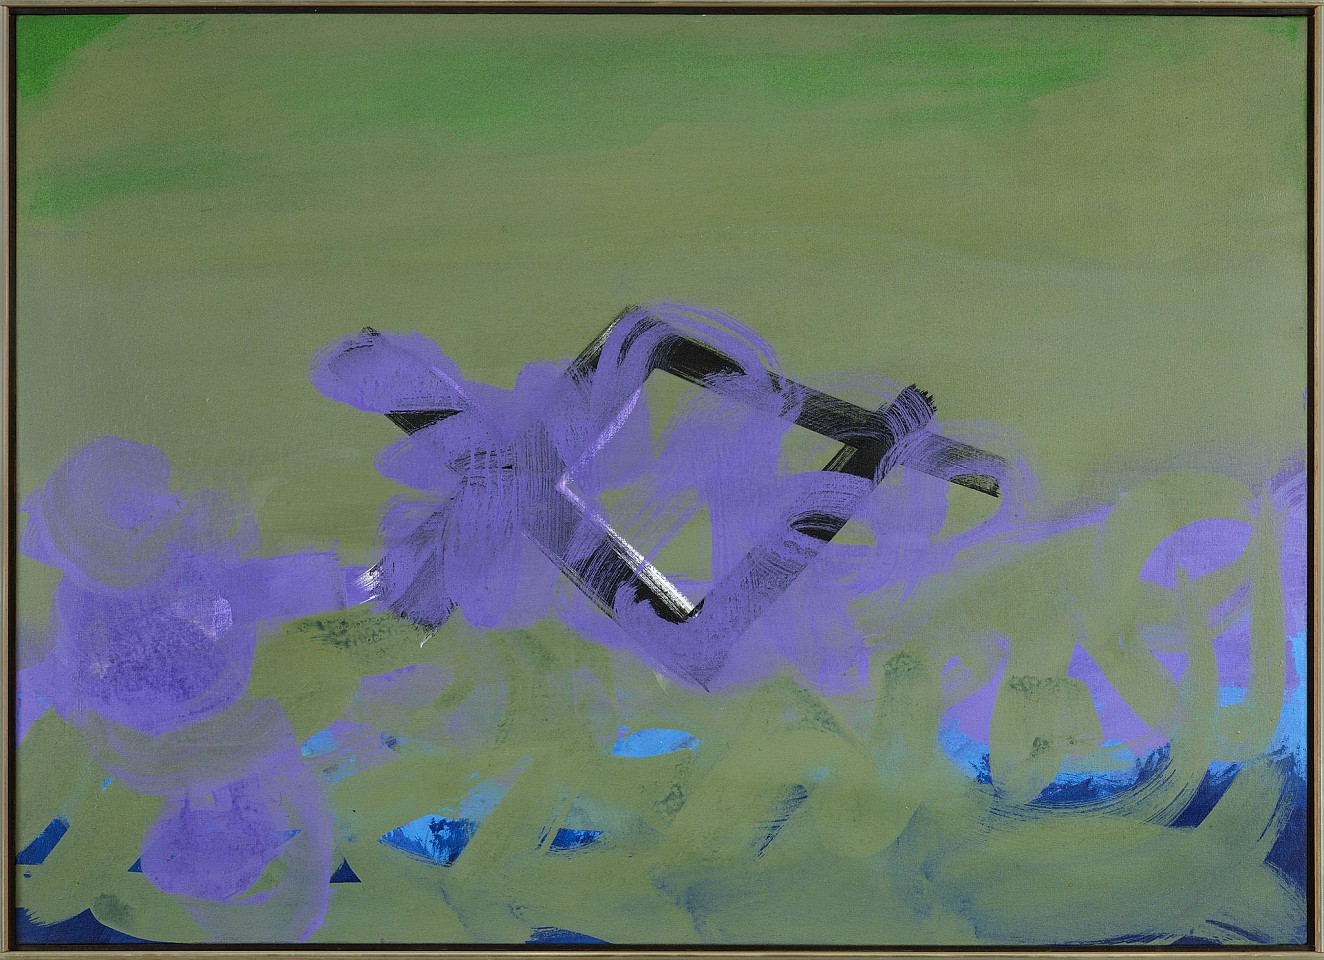 Yvonne Thomas, Buried Effigies II, 1976
Acrylic on canvas, 35 3/4 x 50 in. (90.8 x 127 cm)
THO-00237